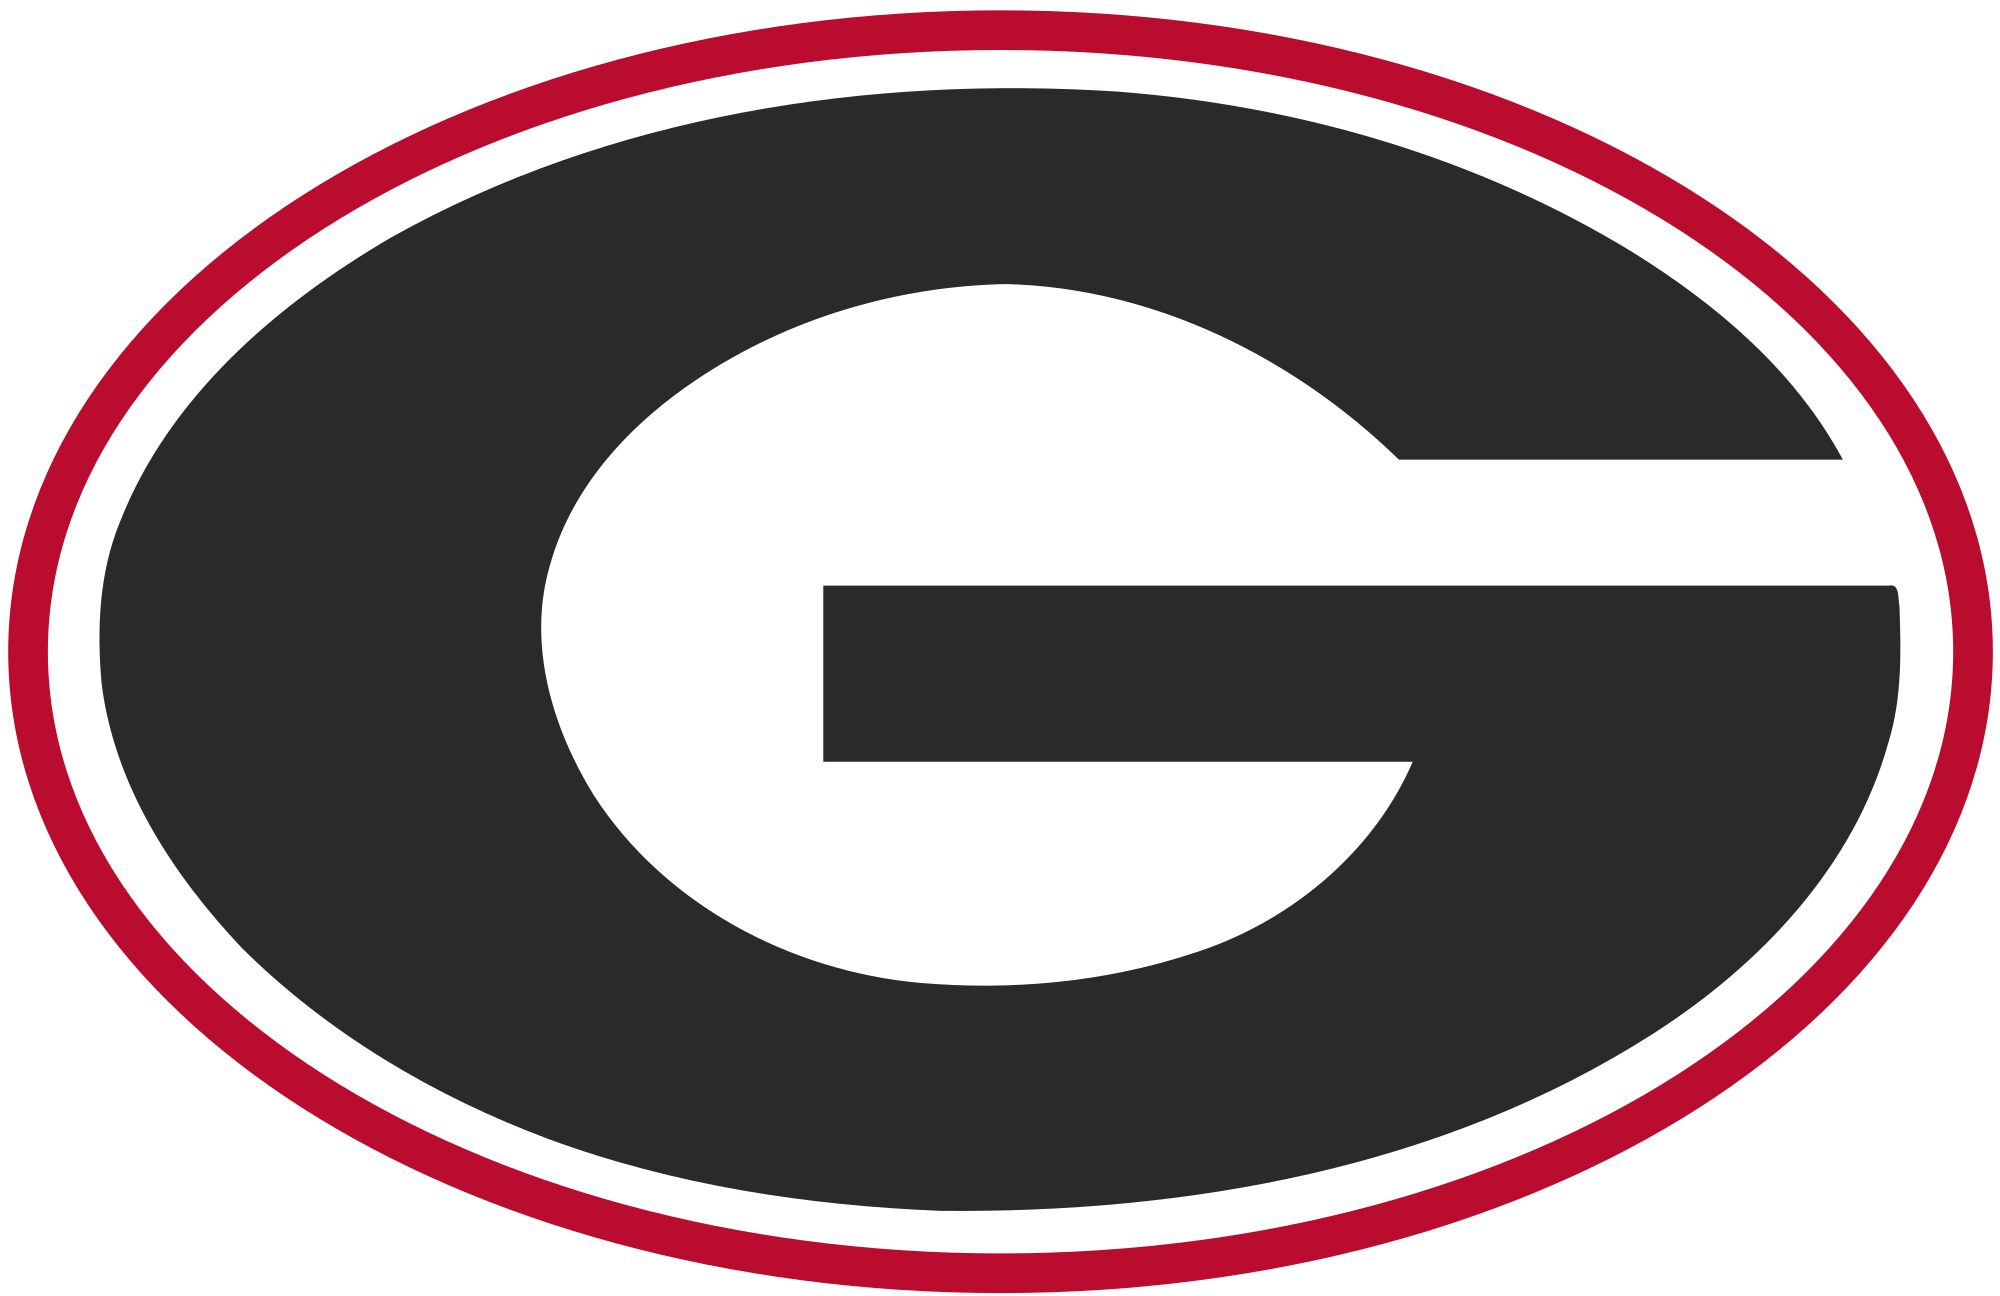 Georgia Bulldogs Logo - Georgia Bulldogs football